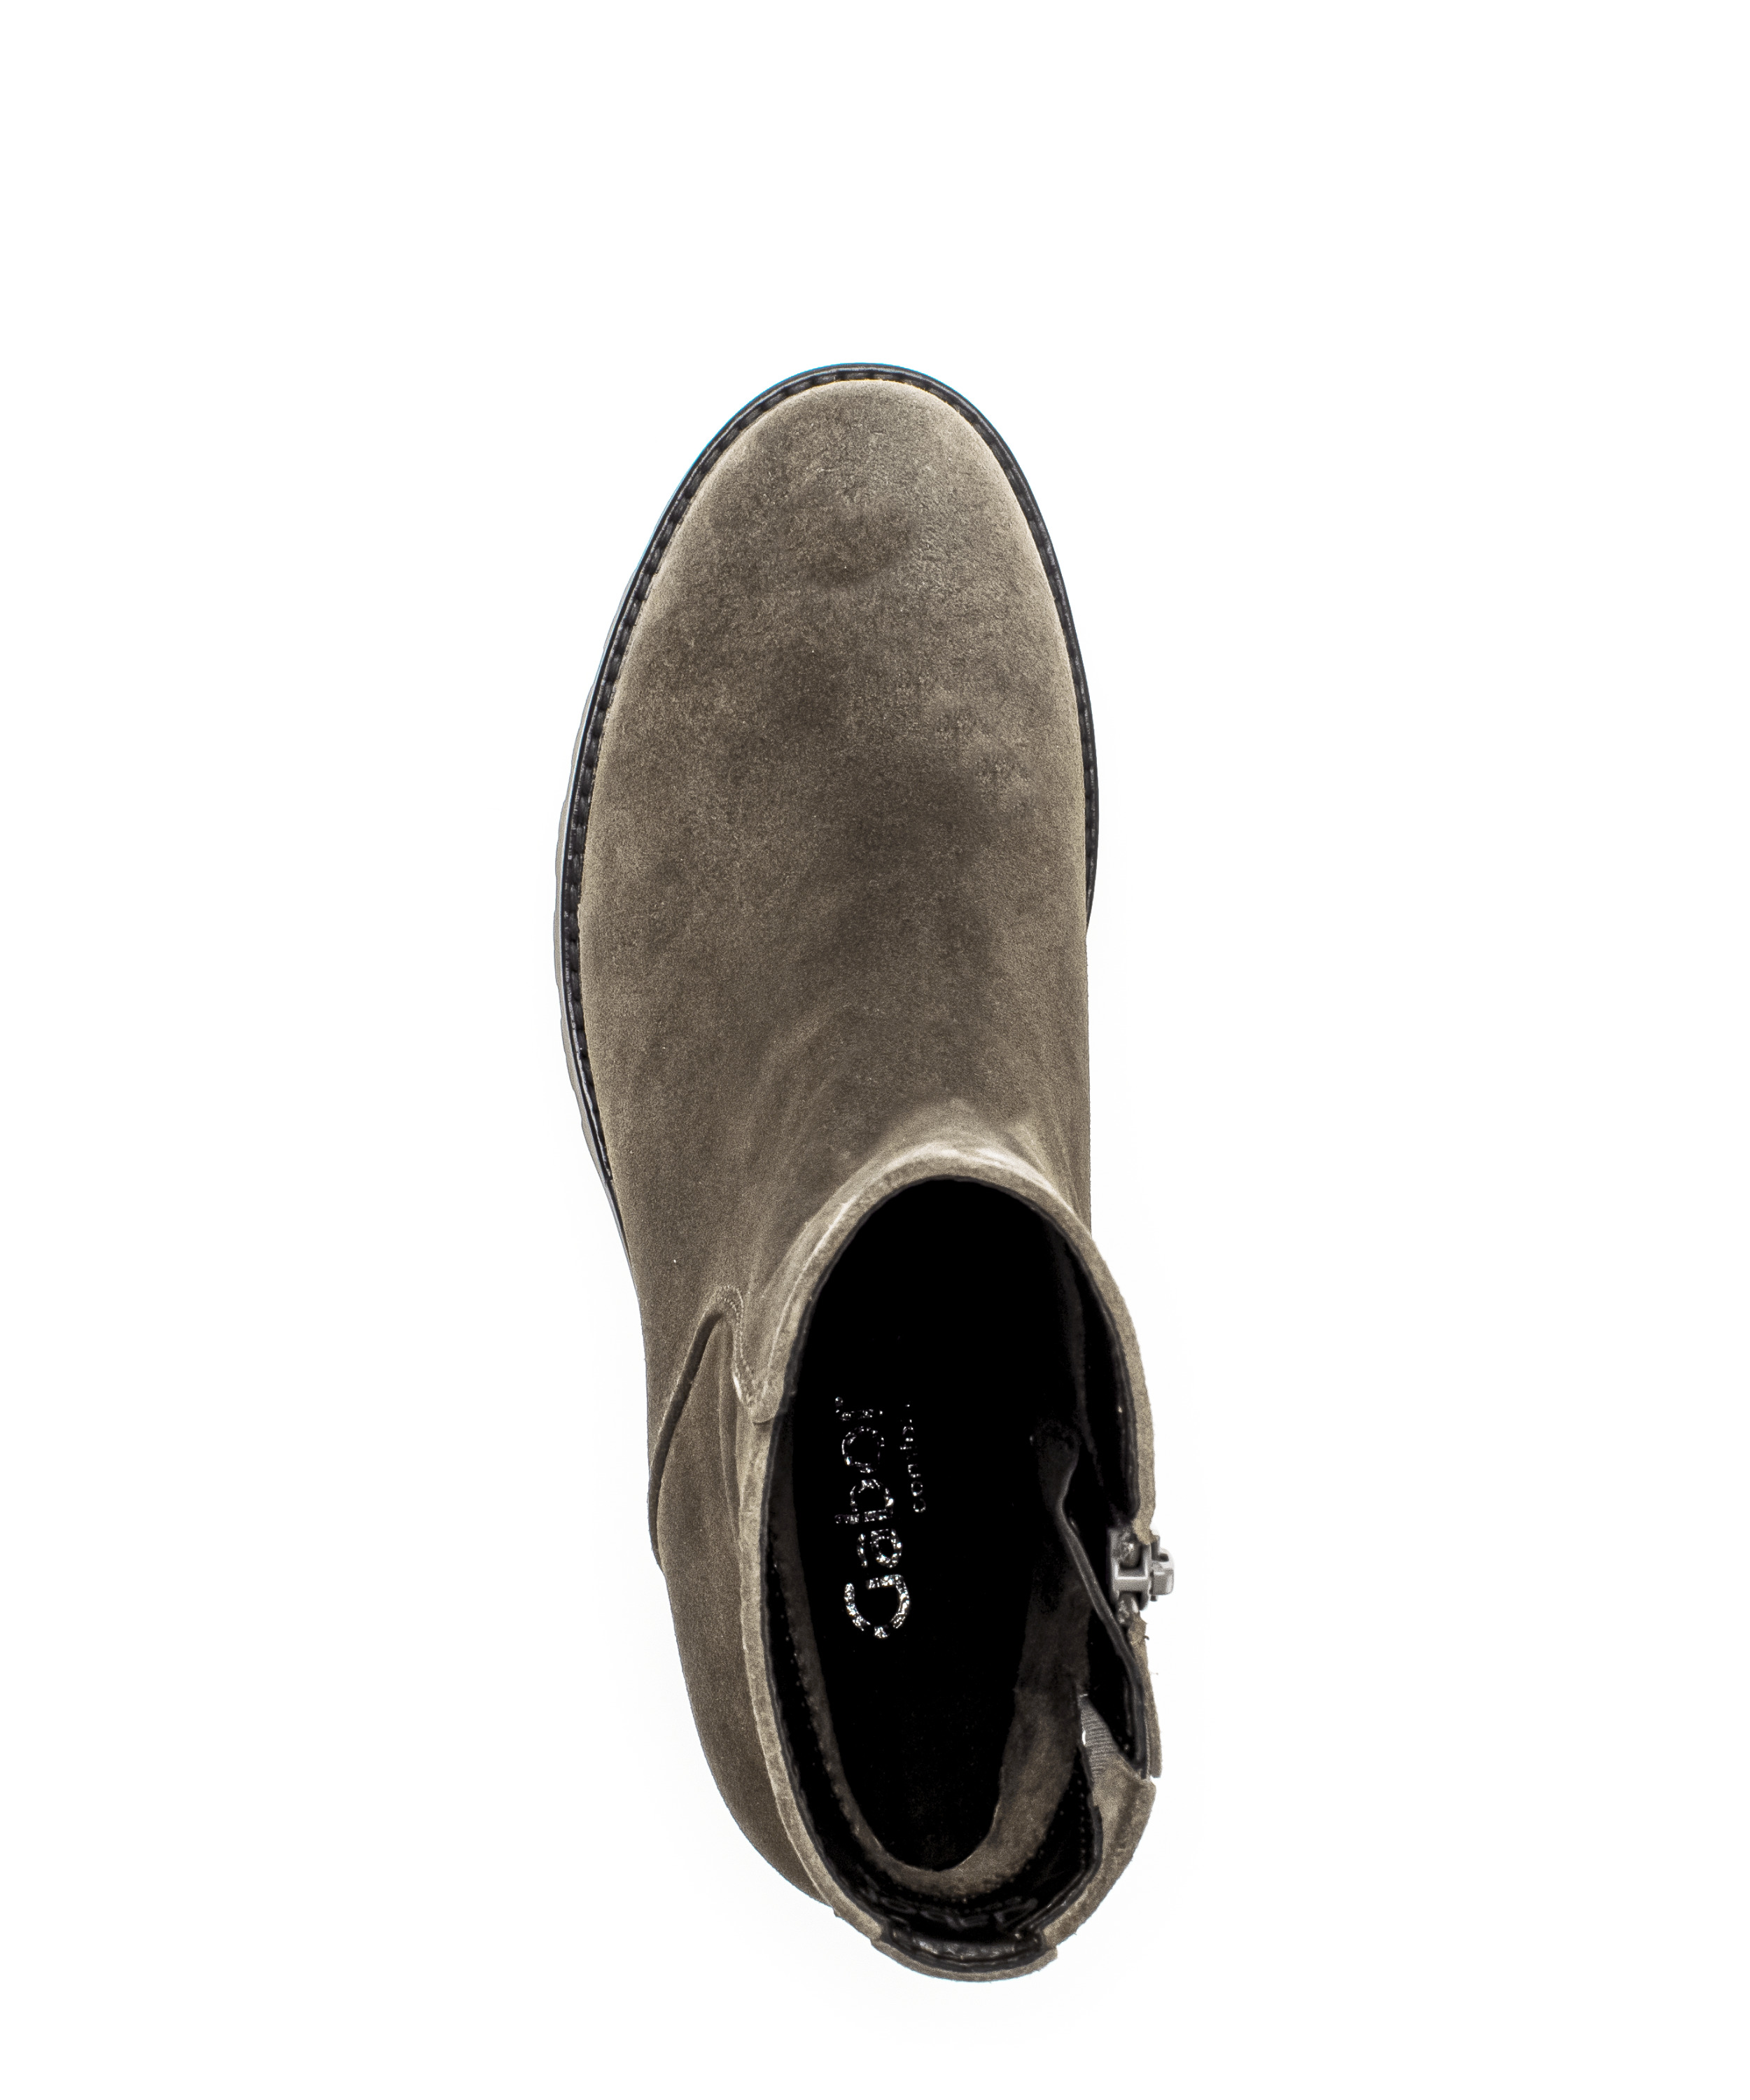 Gabor Shoes Stiefelette - Grau Leder